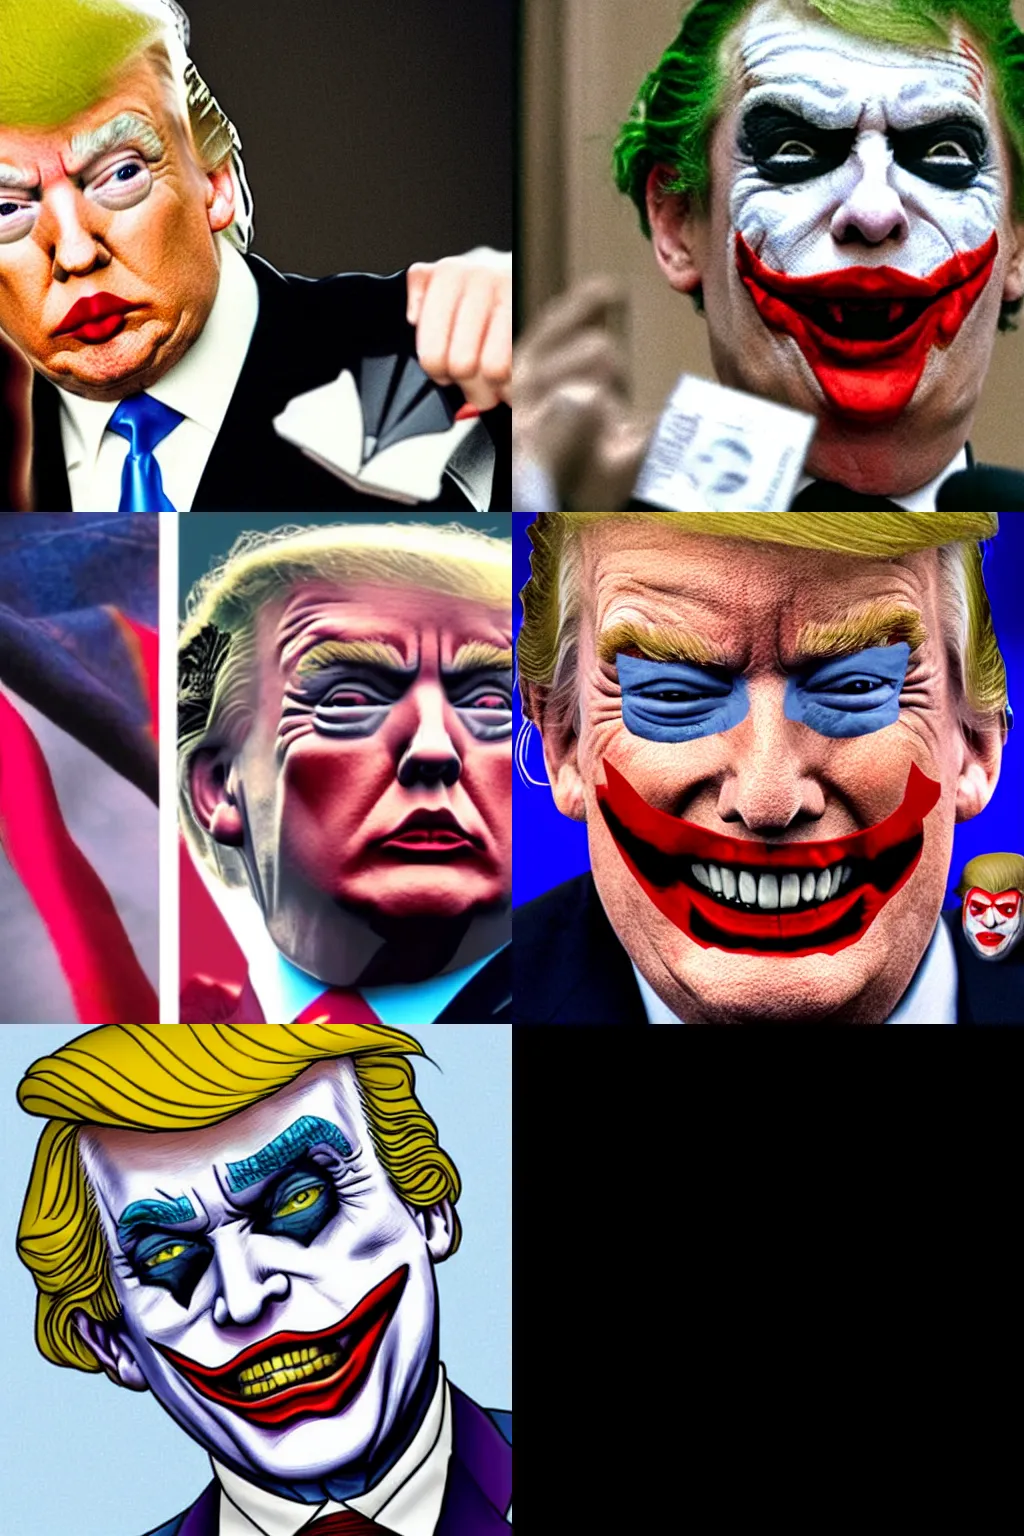 Prompt: Donald Trump as The Joker